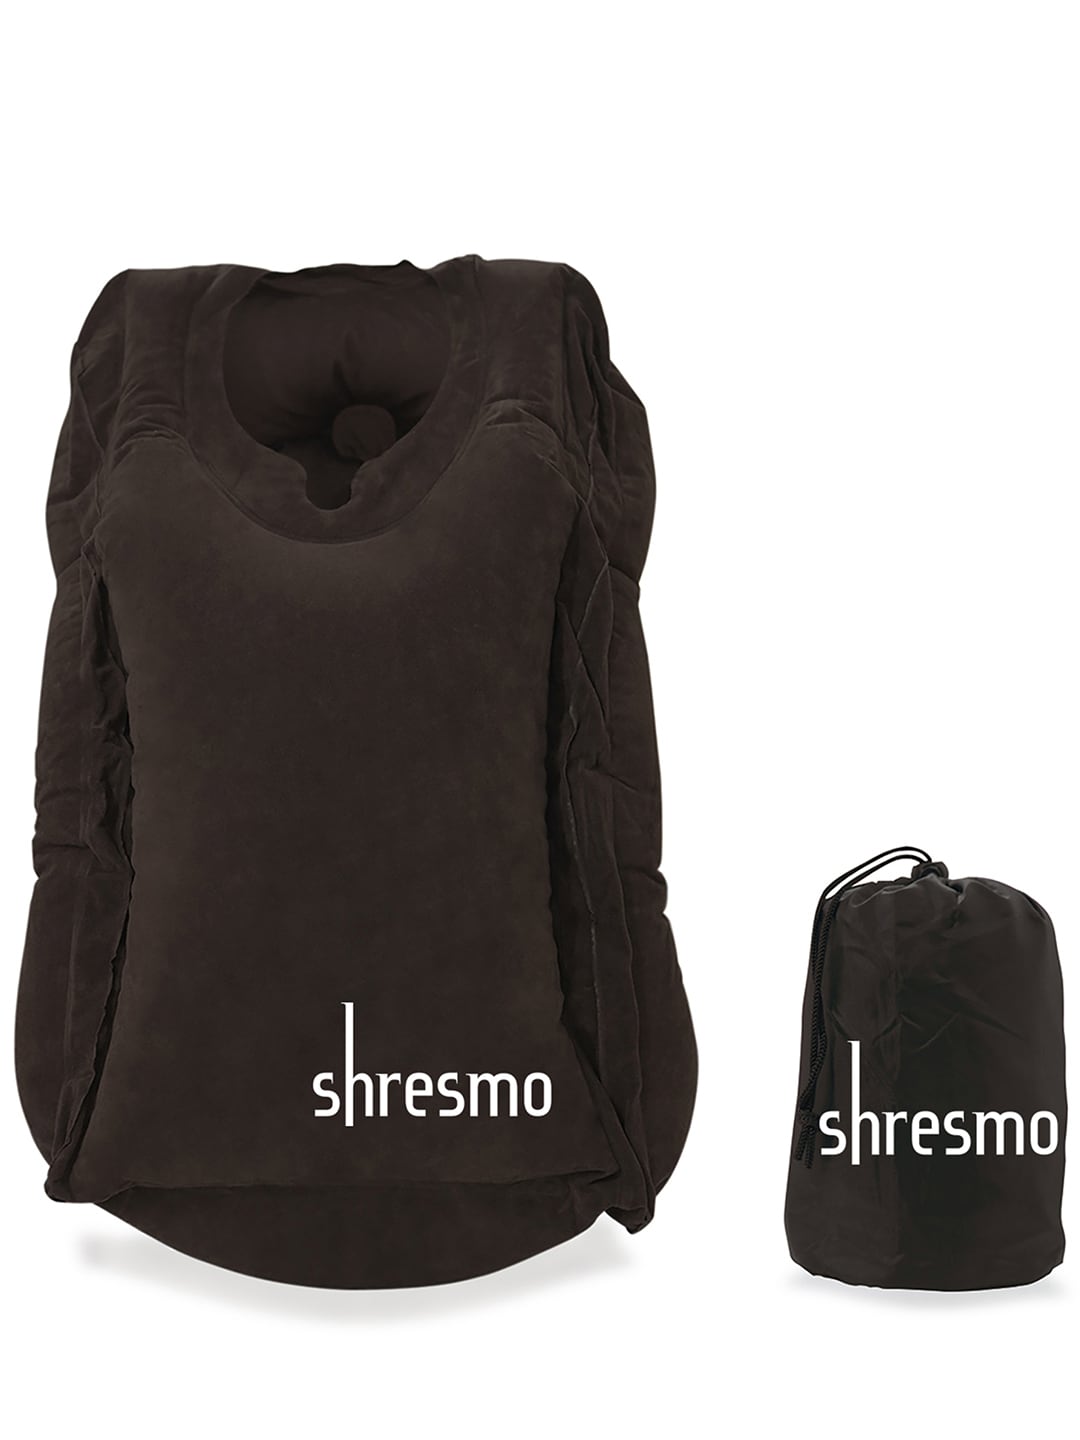 Shresmo Unisex Brown Travel Neck Pillow Price in India